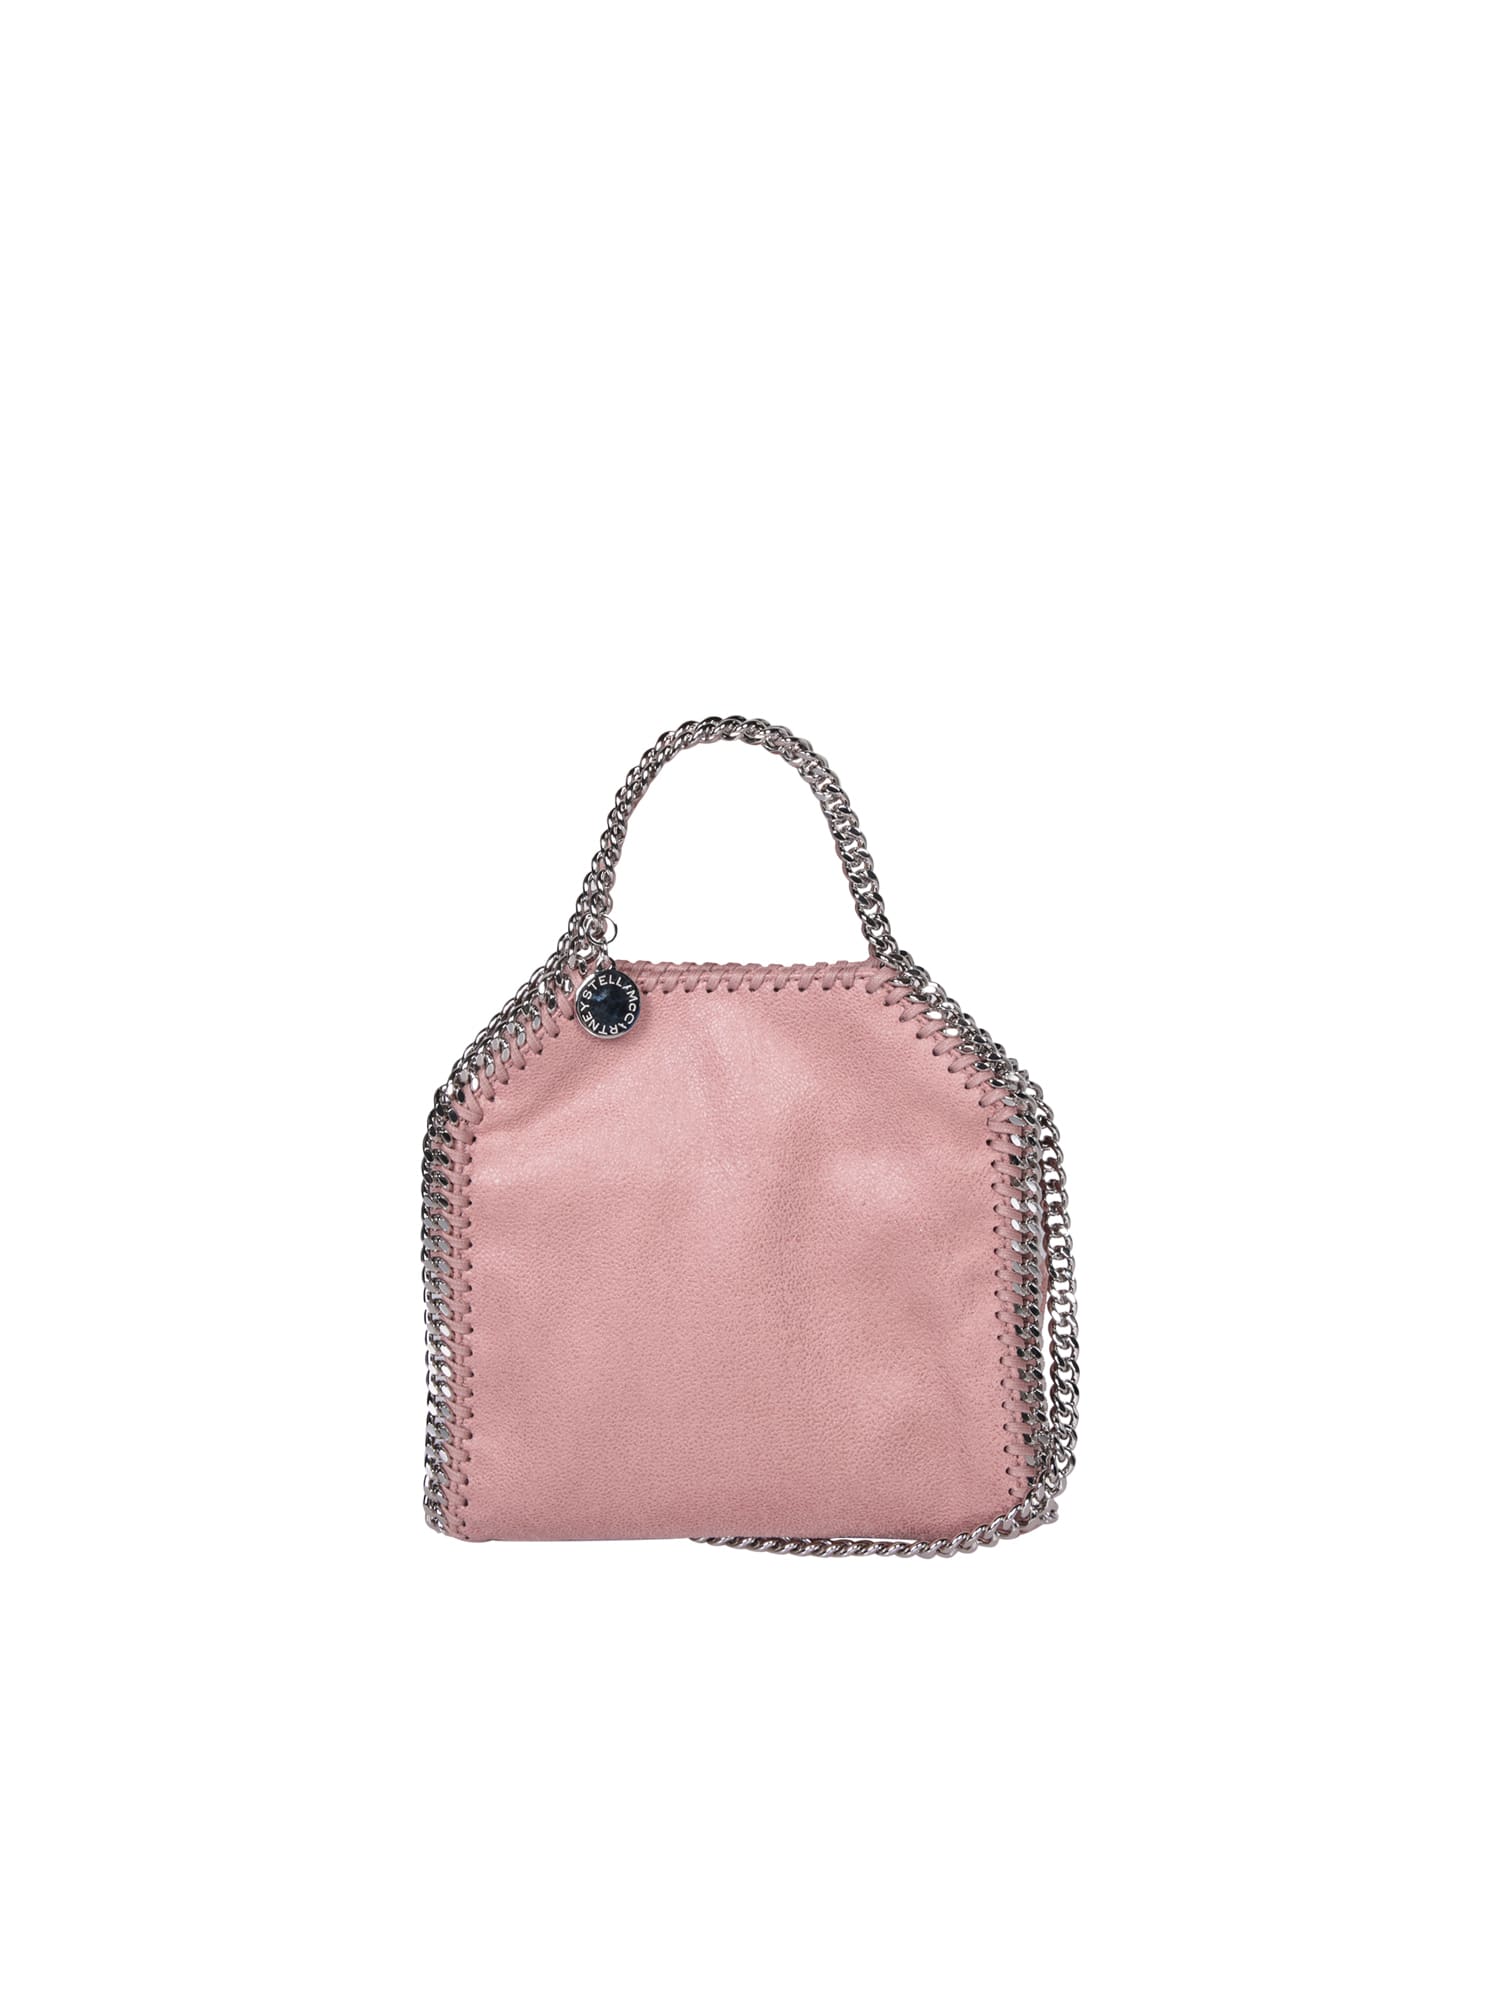 Stella Mccartney Falabella Tiny Shaggy Pink Bag